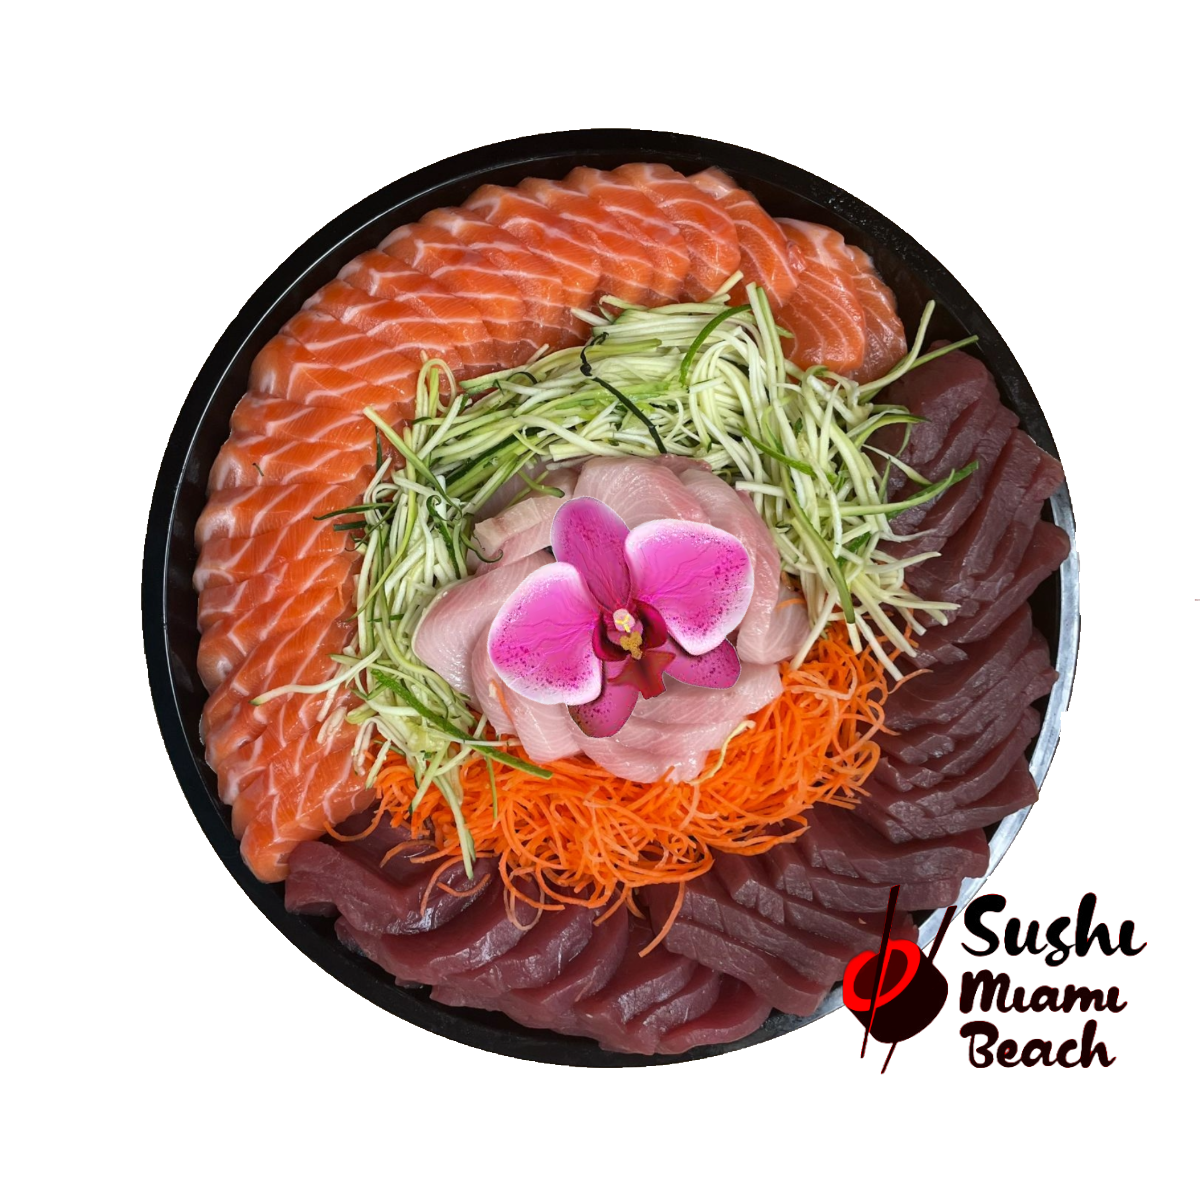 Mix Sashimi Platter | Salmon Tuna Hamachi | Choose your own size